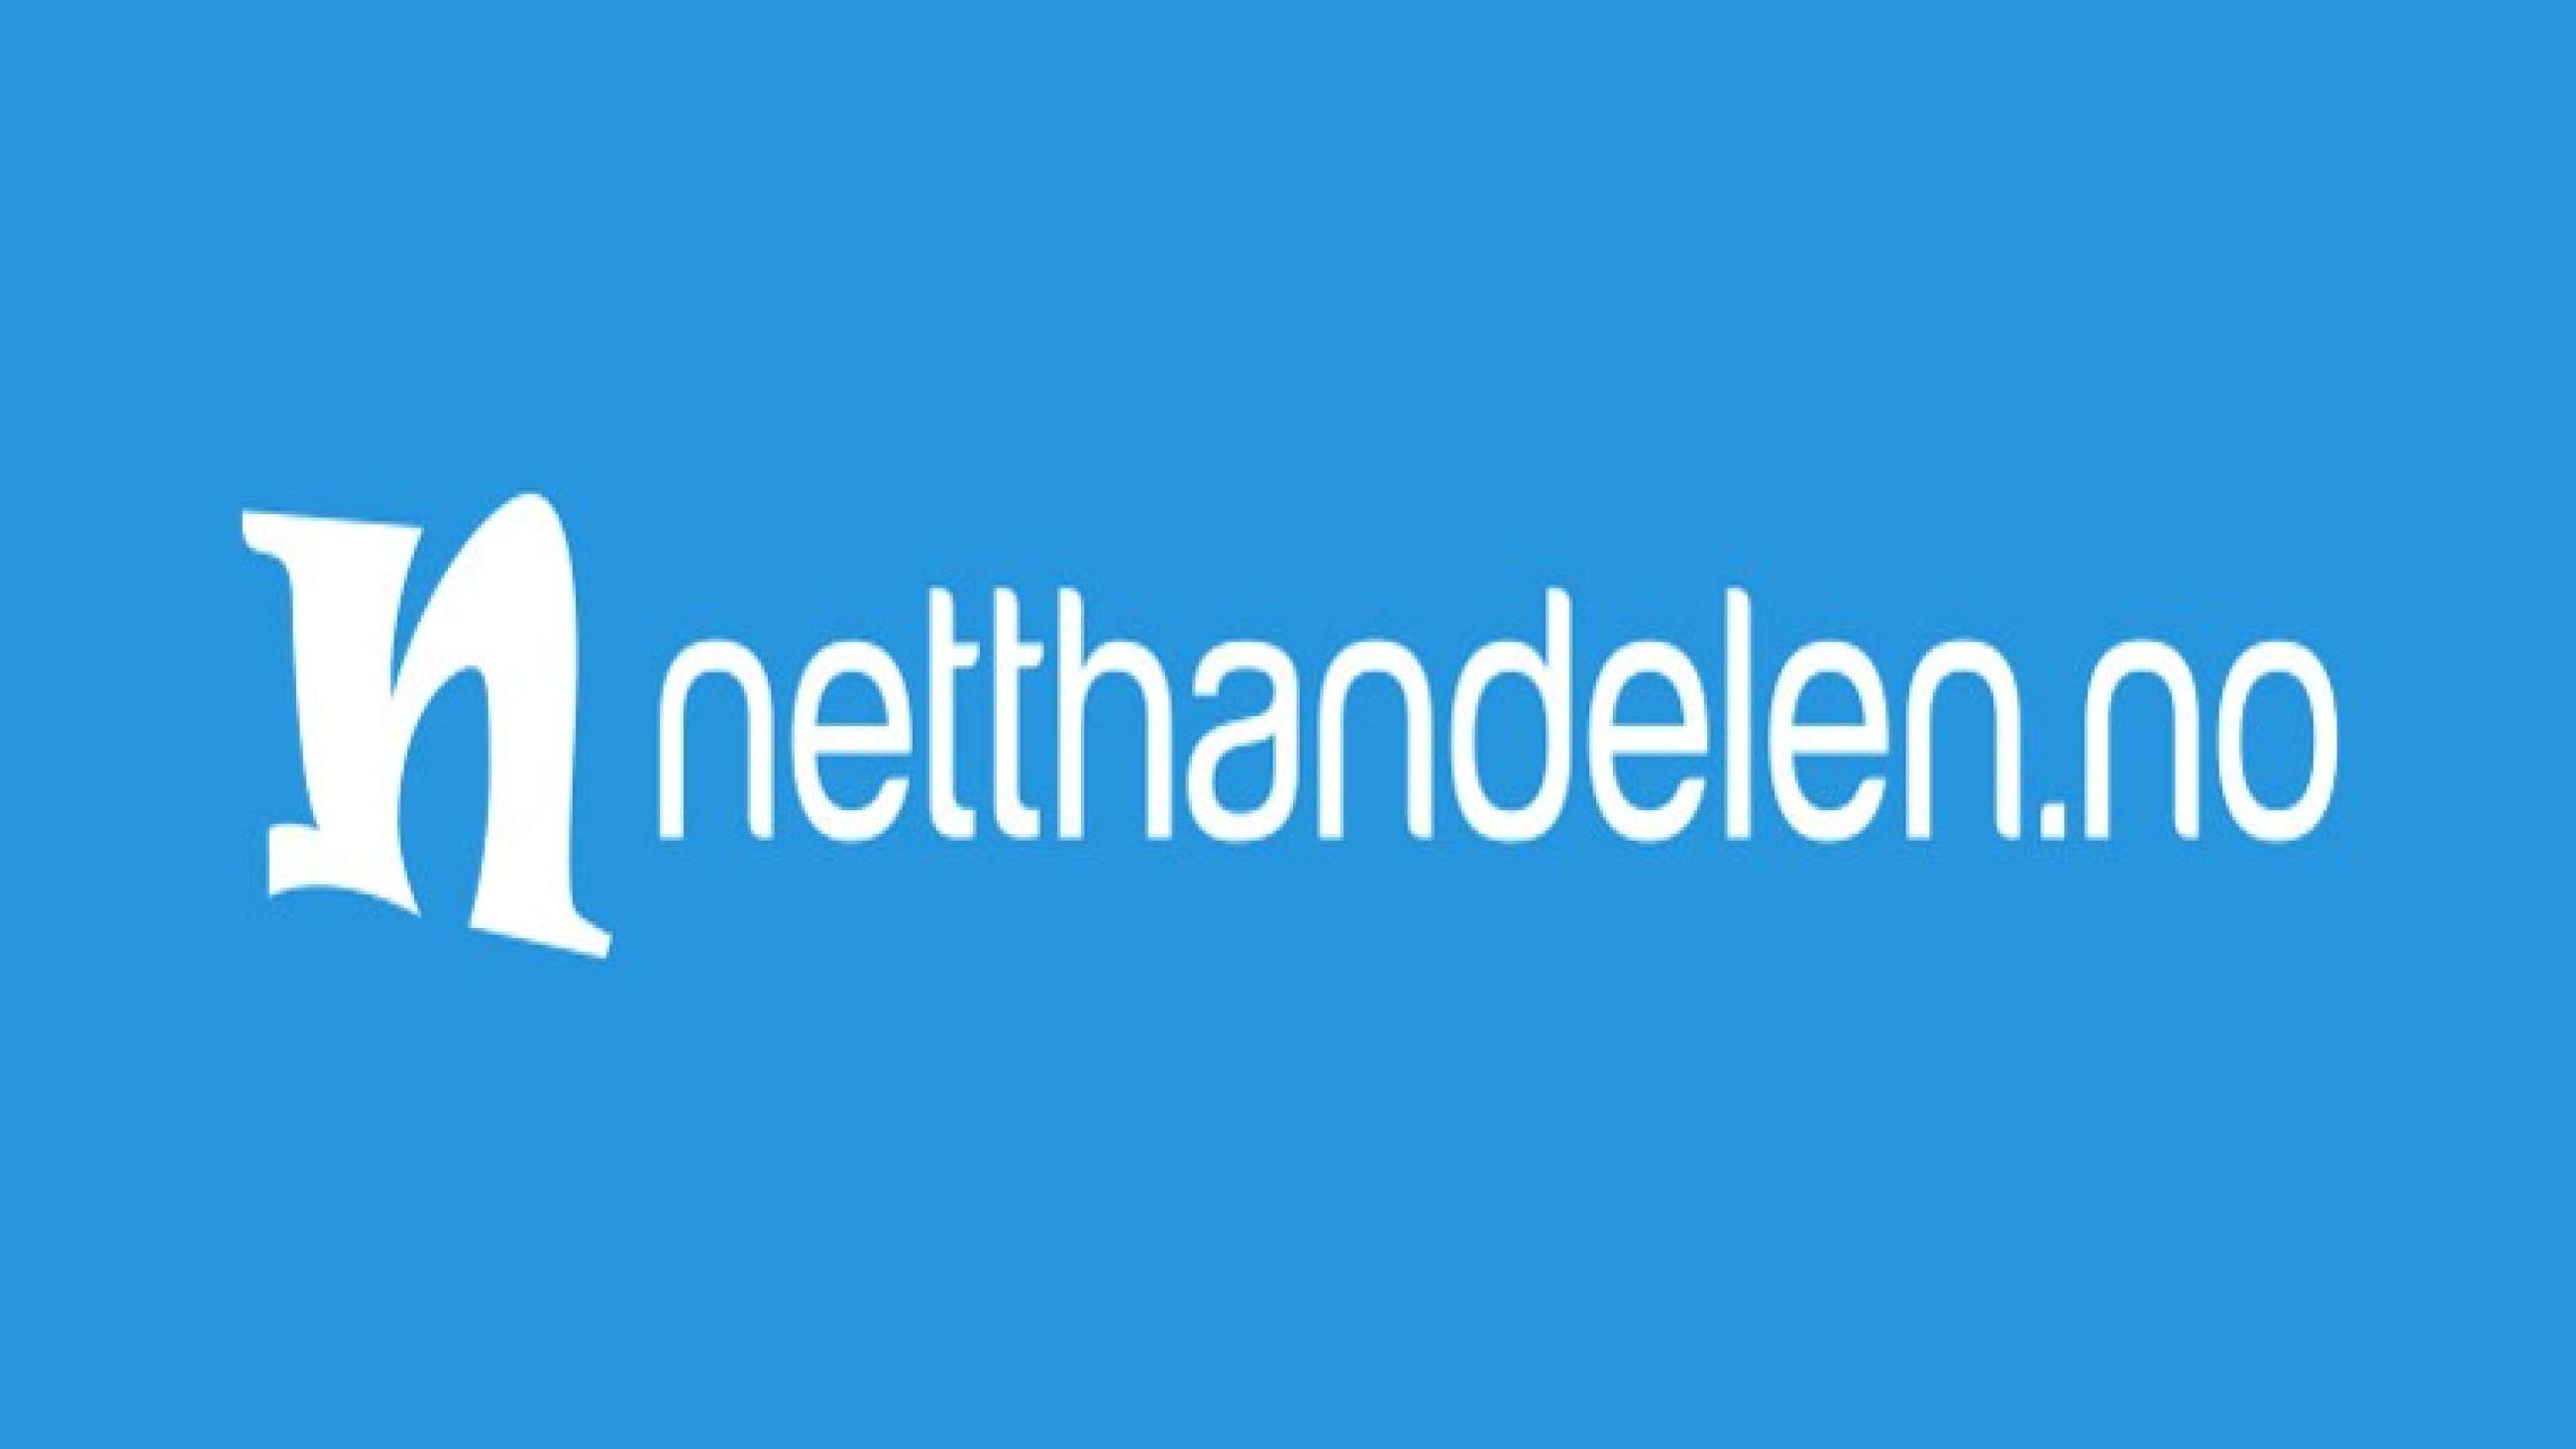 Netthandelen.no sin logo